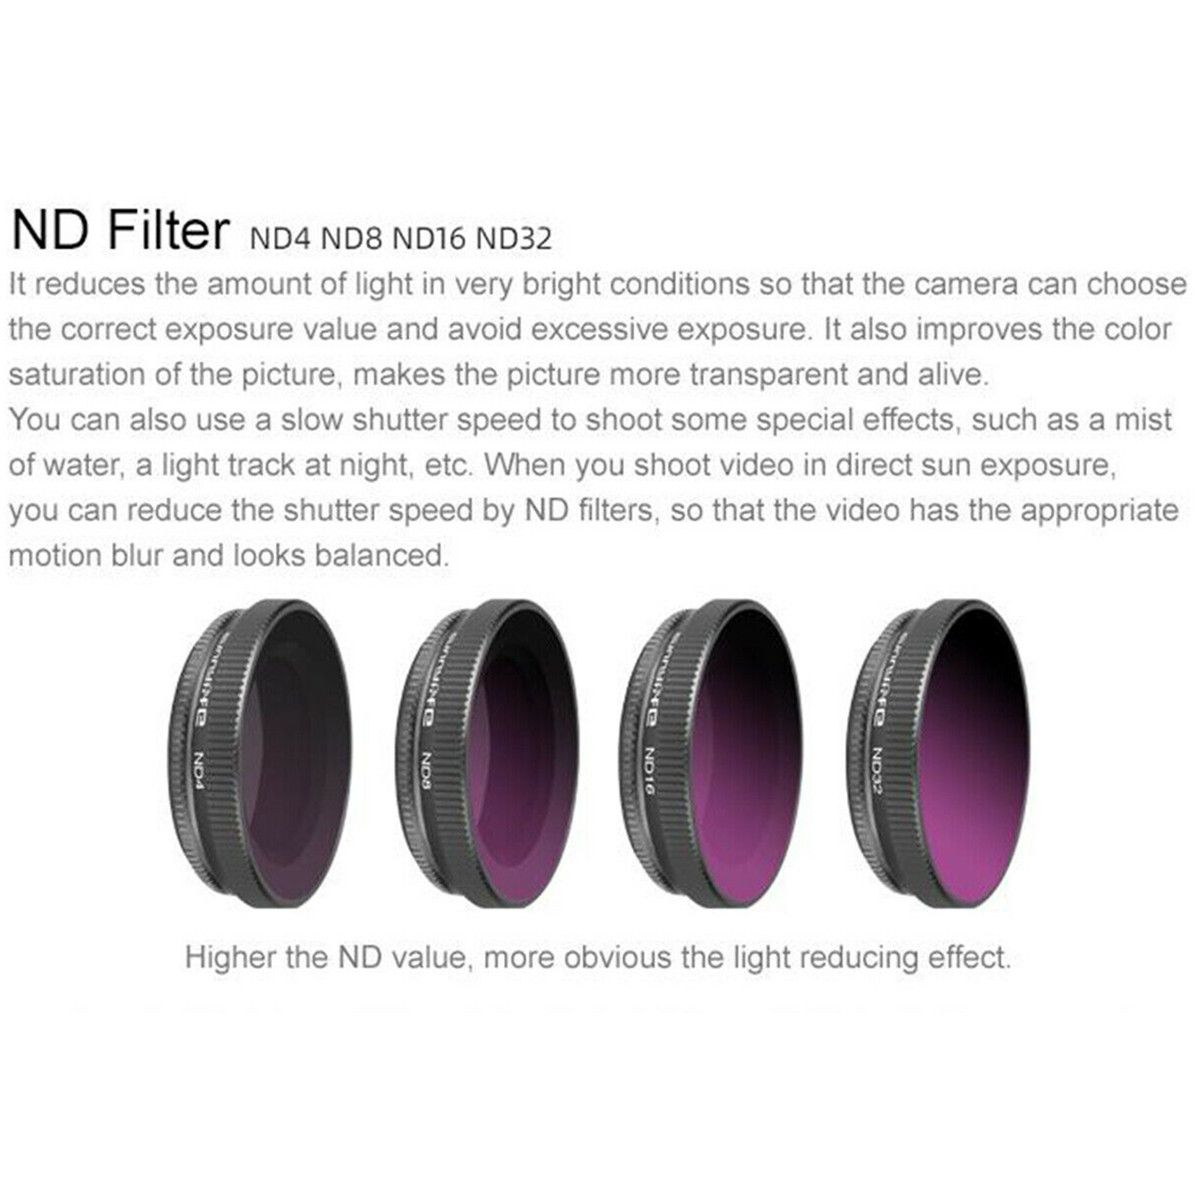 2PCS-Adjustable-Lens-Filters--ND8-Diving-Filter-For-DJI-OSMO-Action-Sport-Camera-1533209